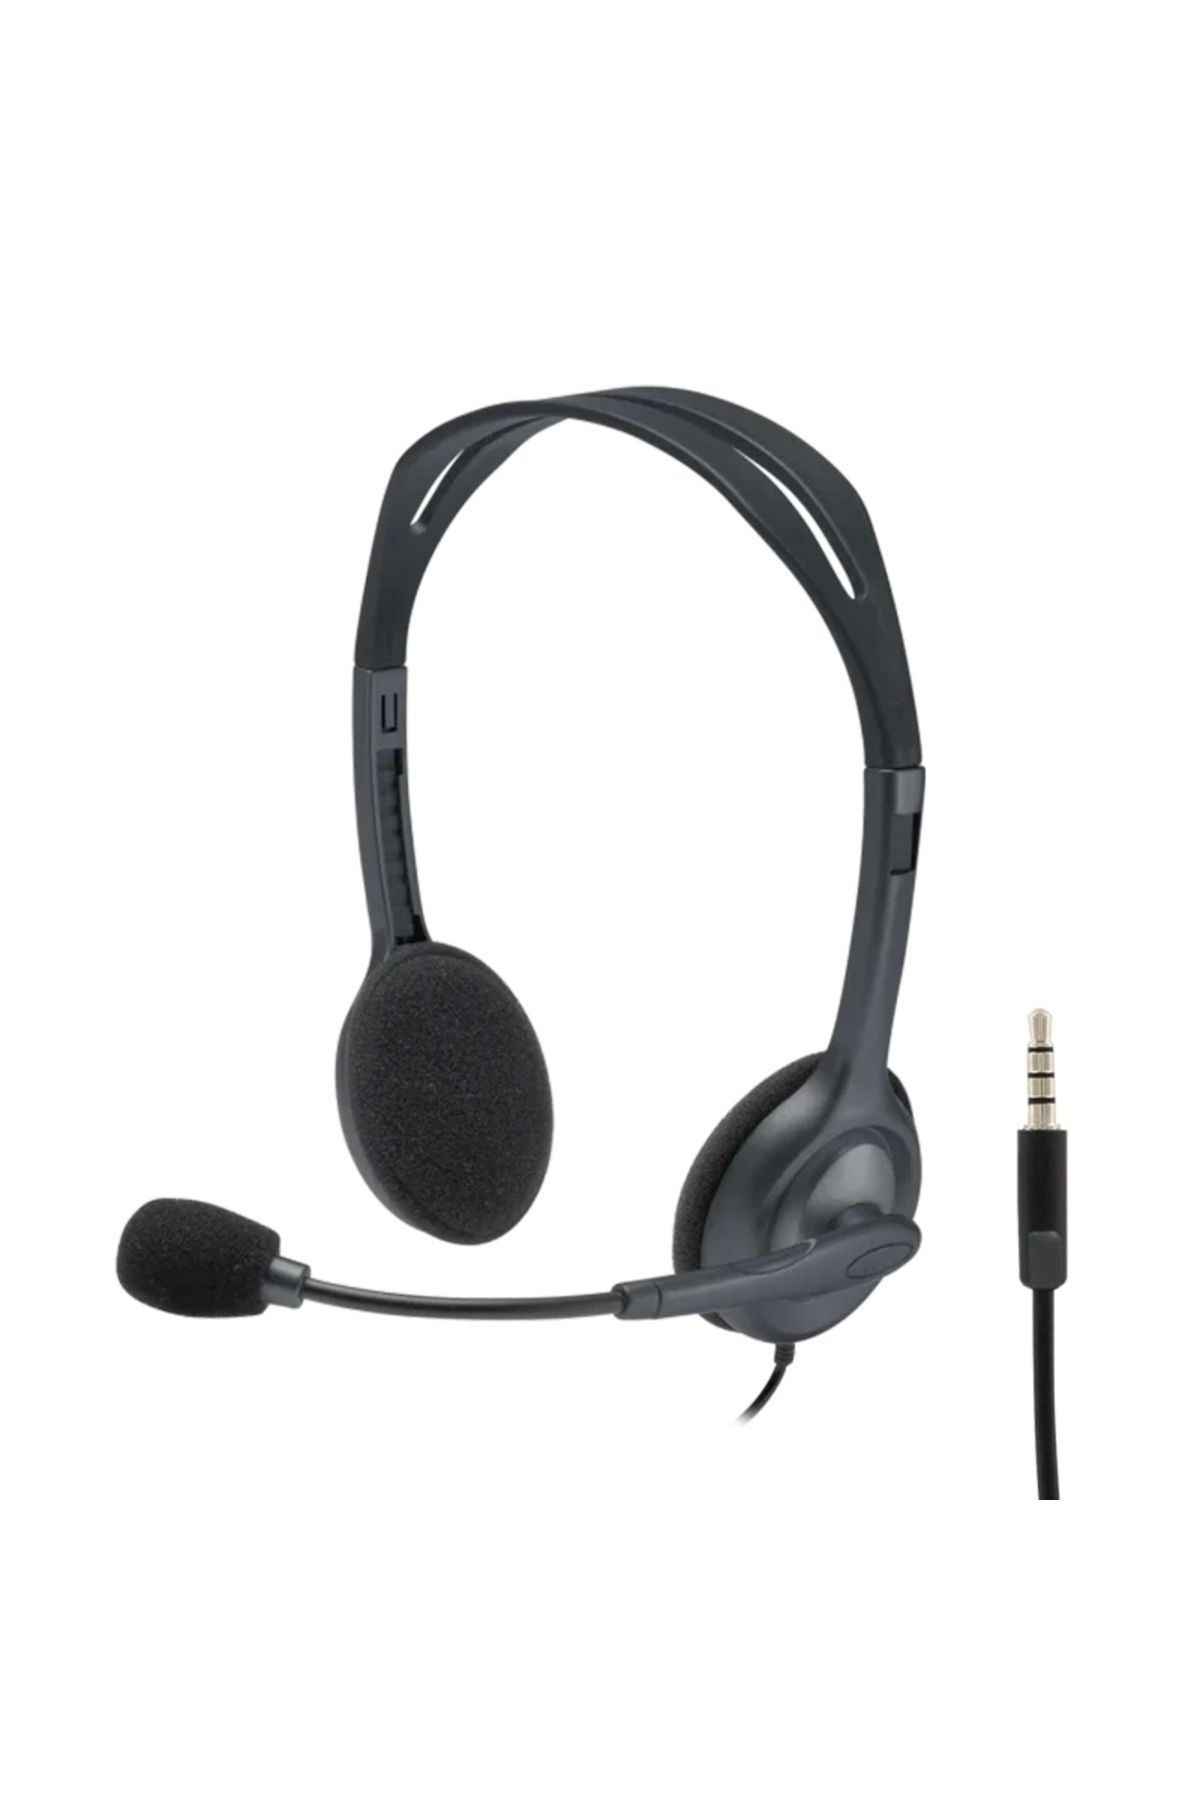 Epilons Logıtech H111 Stereo Siyah Kulaklık